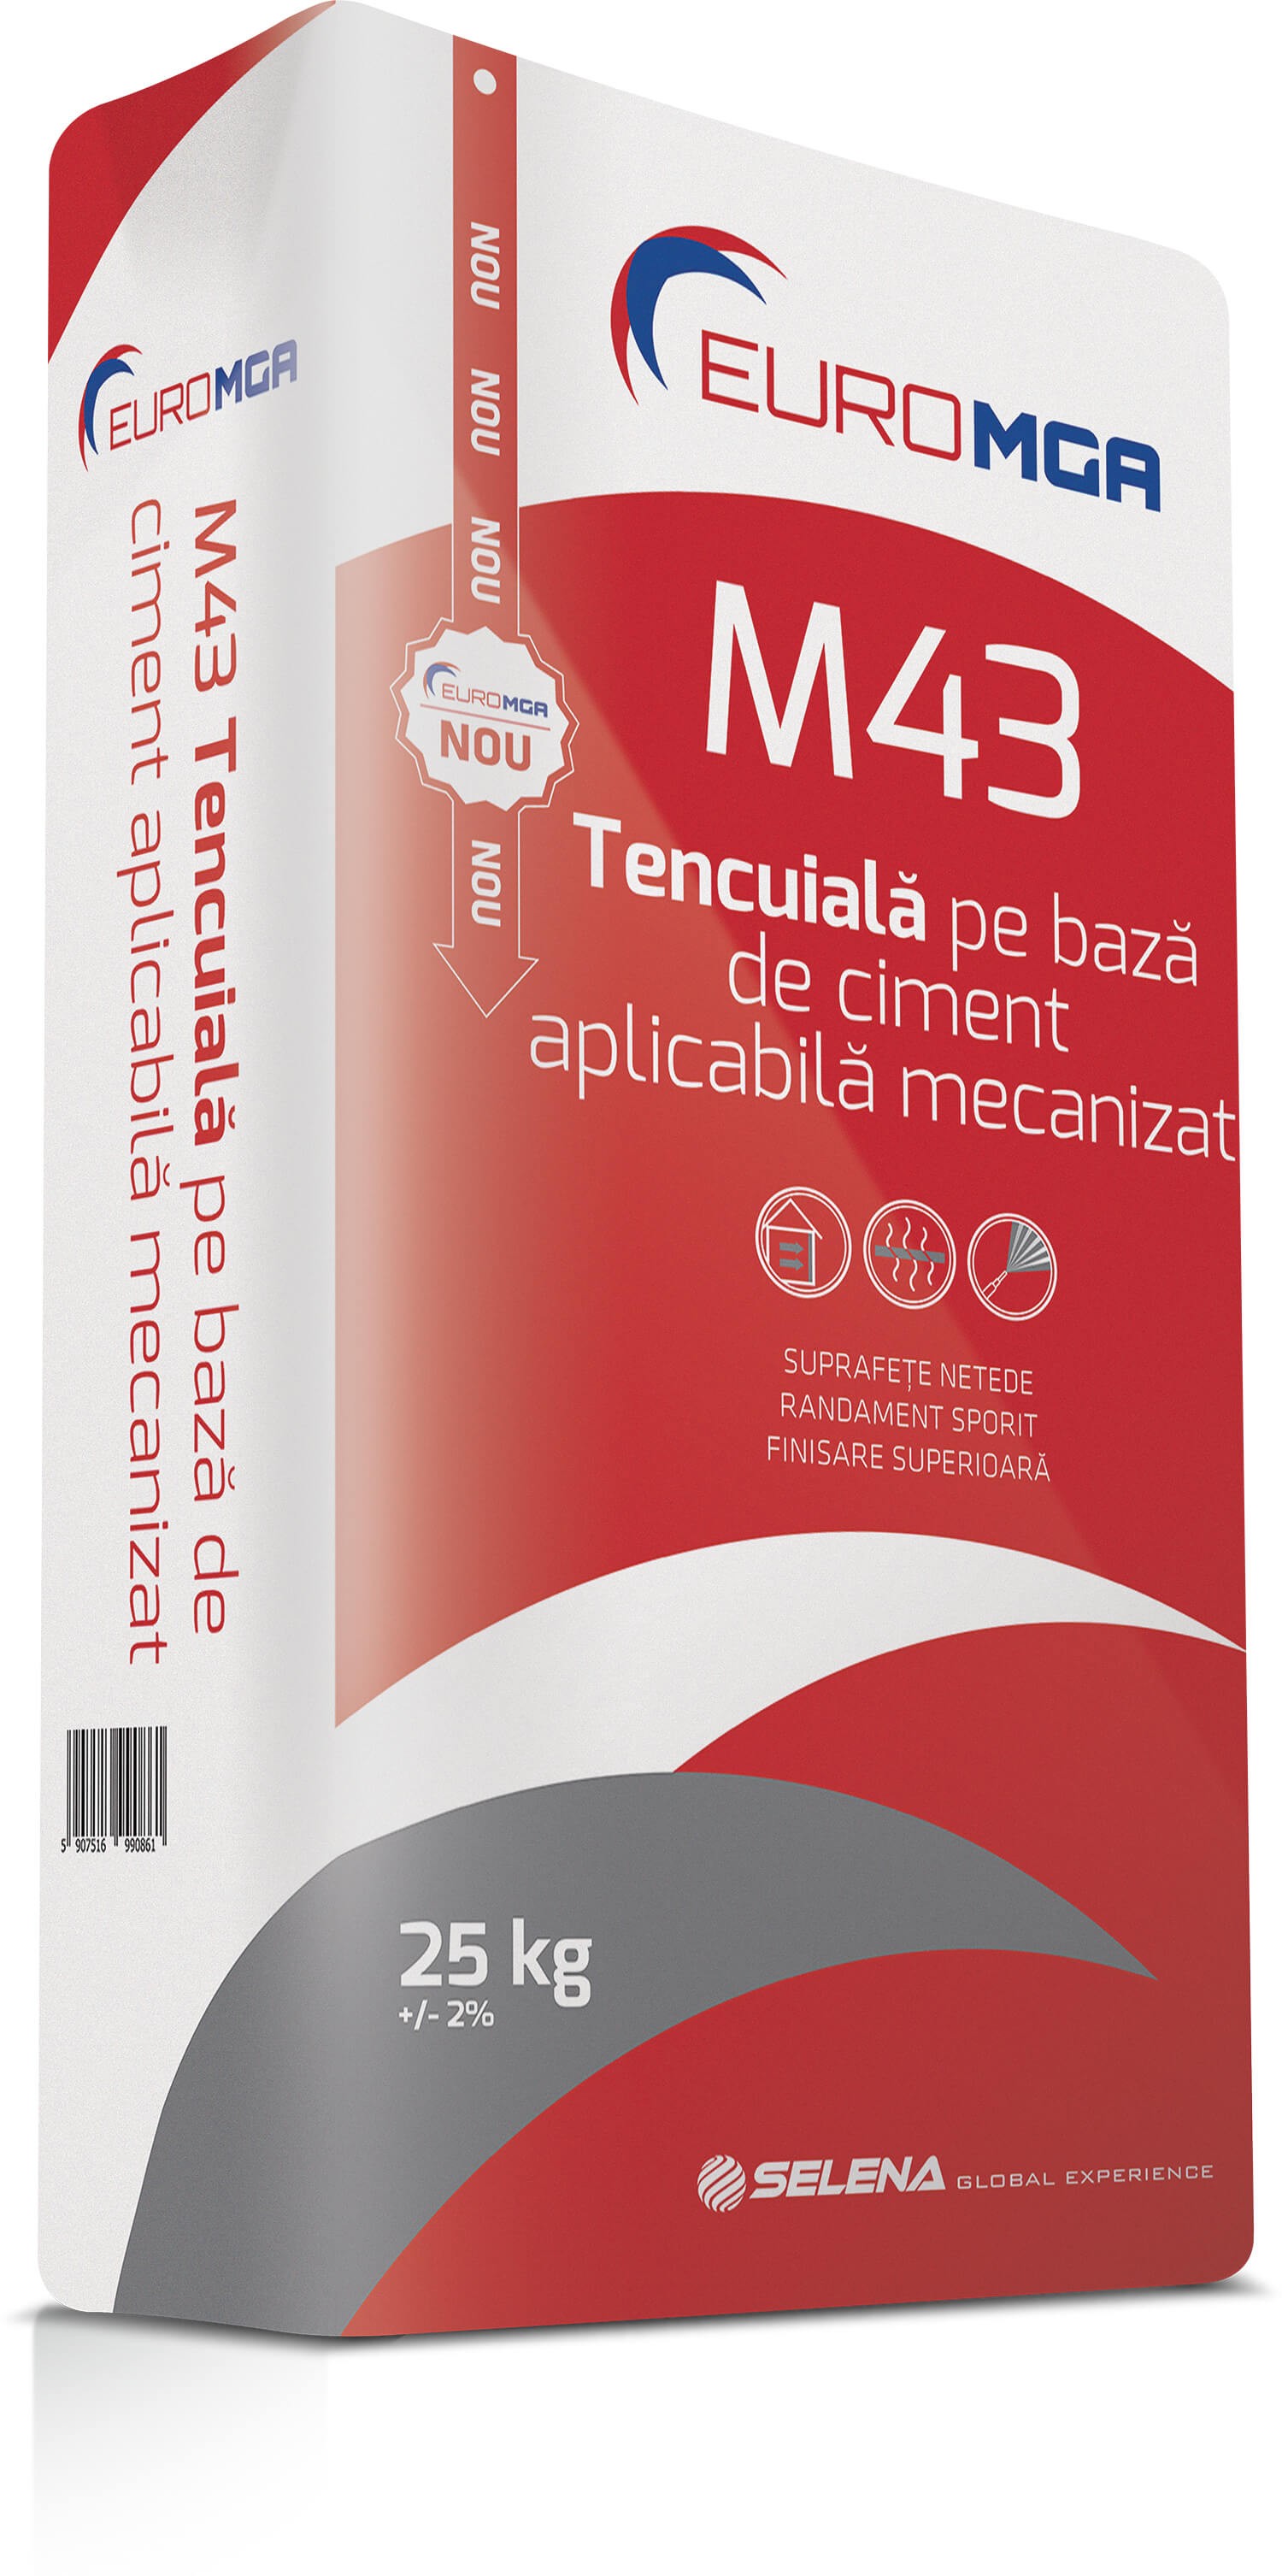 TENCUIALA M43 30 KG EUROMGA